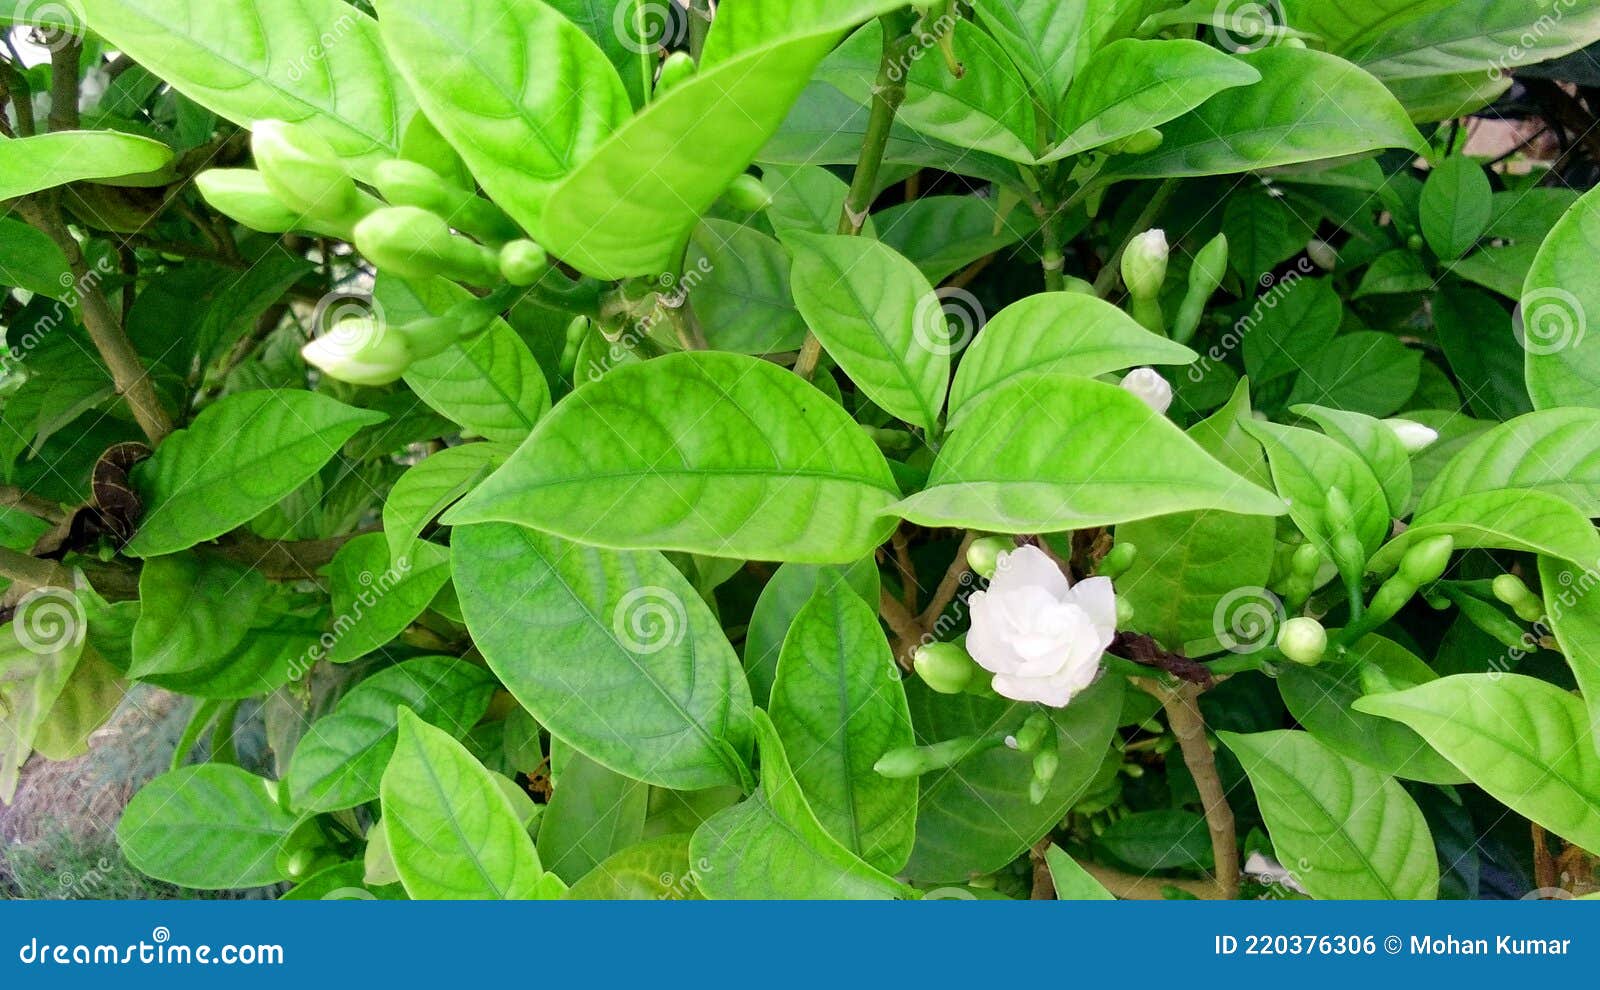 arabian jasmine mogra flower buds